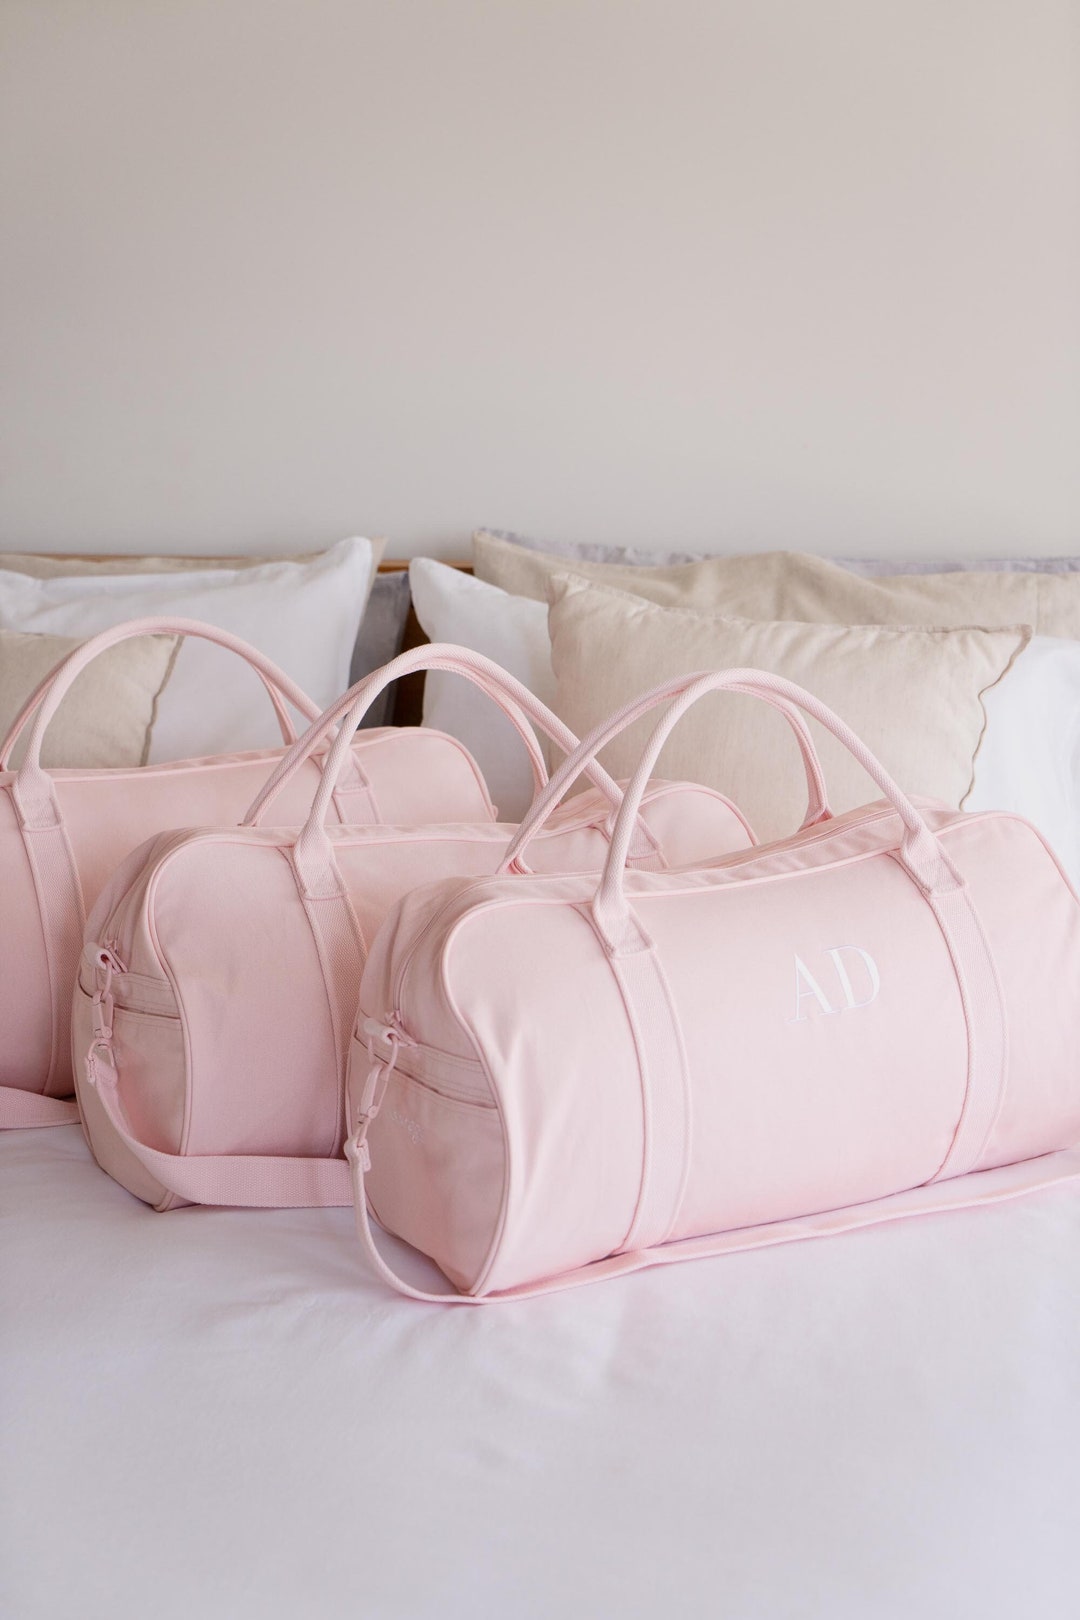 Victorias Secret Pink Floral Logo Small Paper Shopping Gift Displa Craft  Bag NEW